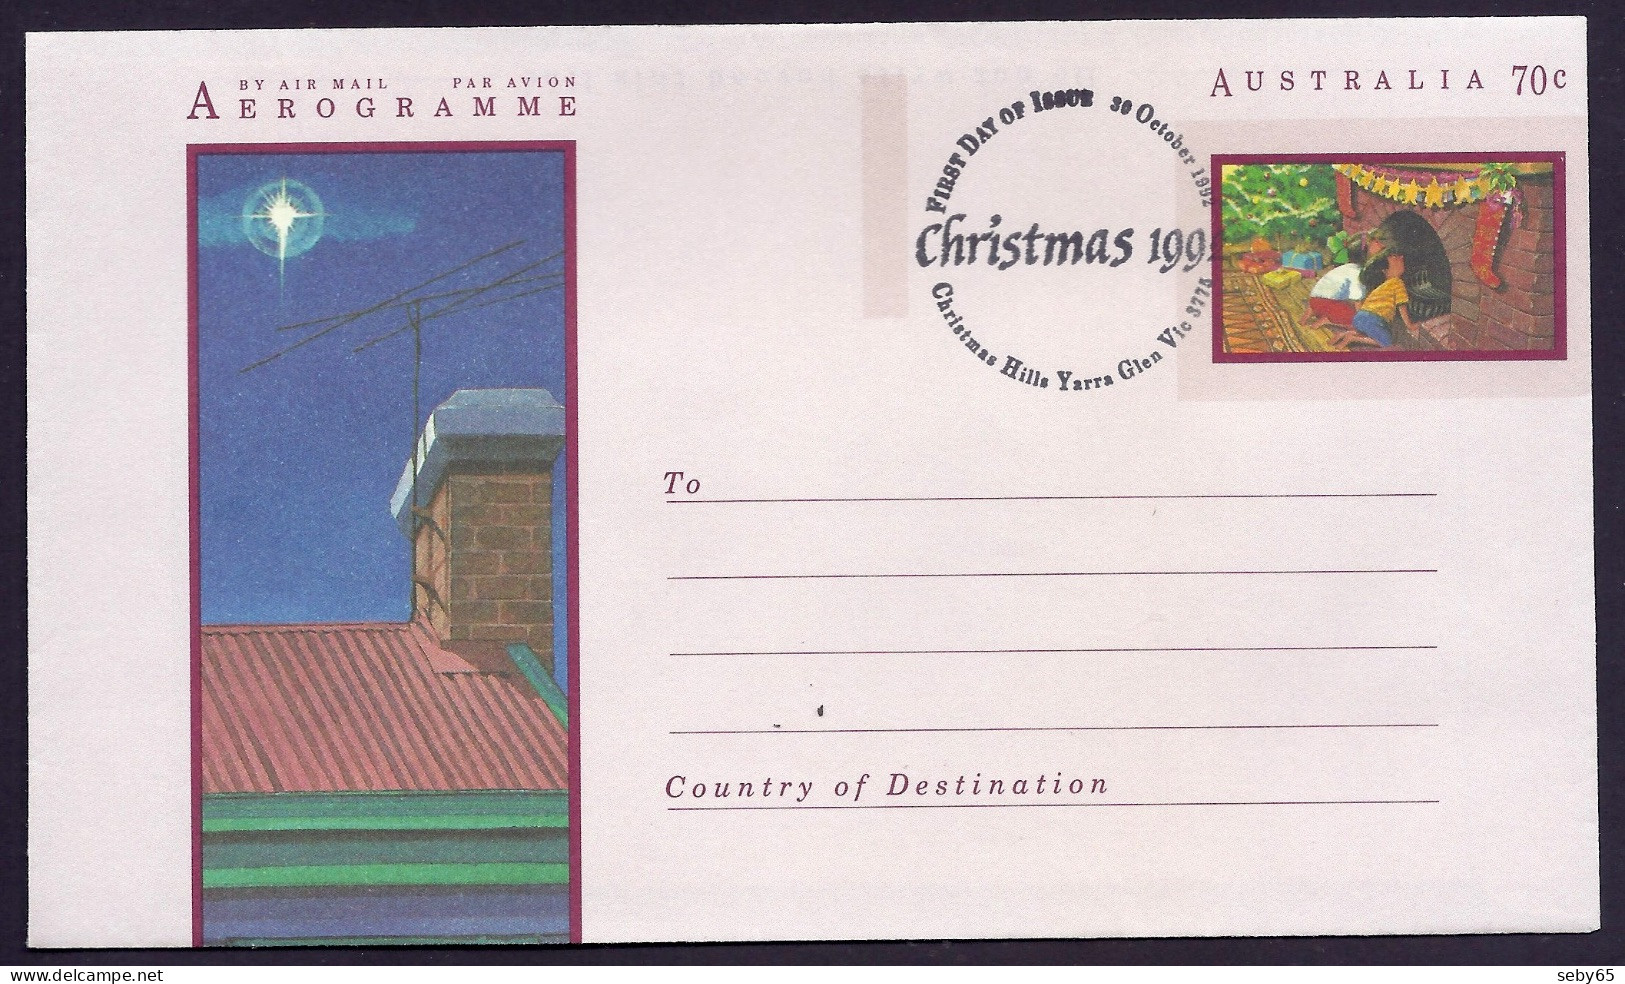 Australia 1992 Aerogramme - Christmas, Noel, Natale, Nativity, 70c - FDC Postmark - Aerogramme